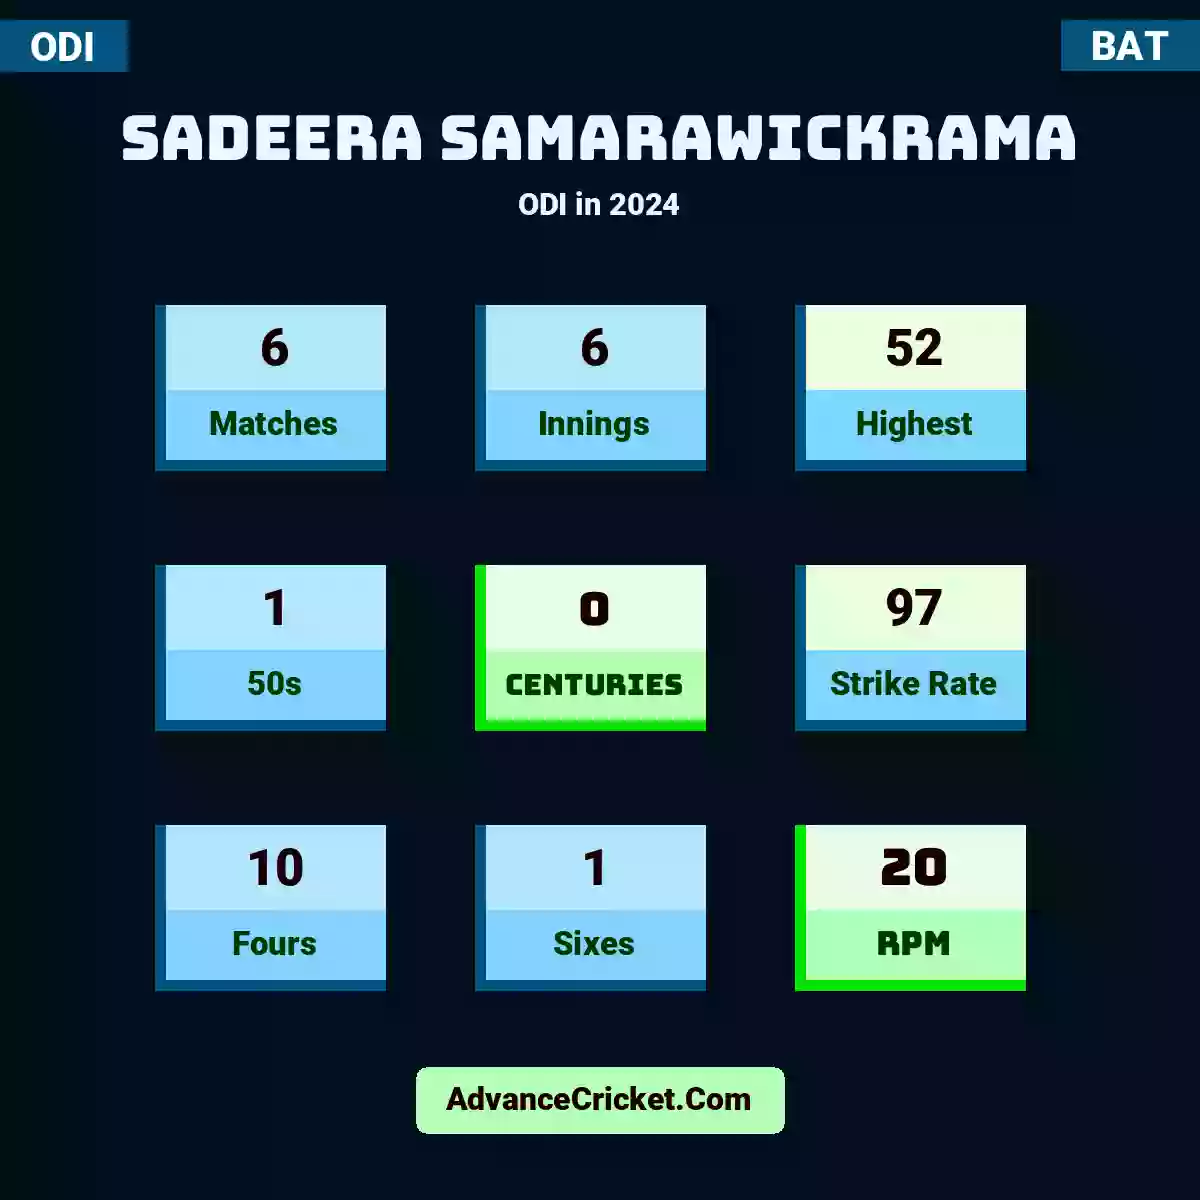 Sadeera Samarawickrama ODI  in 2024, Sadeera Samarawickrama played 6 matches, scored 52 runs as highest, 1 half-centuries, and 0 centuries, with a strike rate of 97. S.Samarawickrama hit 10 fours and 1 sixes, with an RPM of 20.